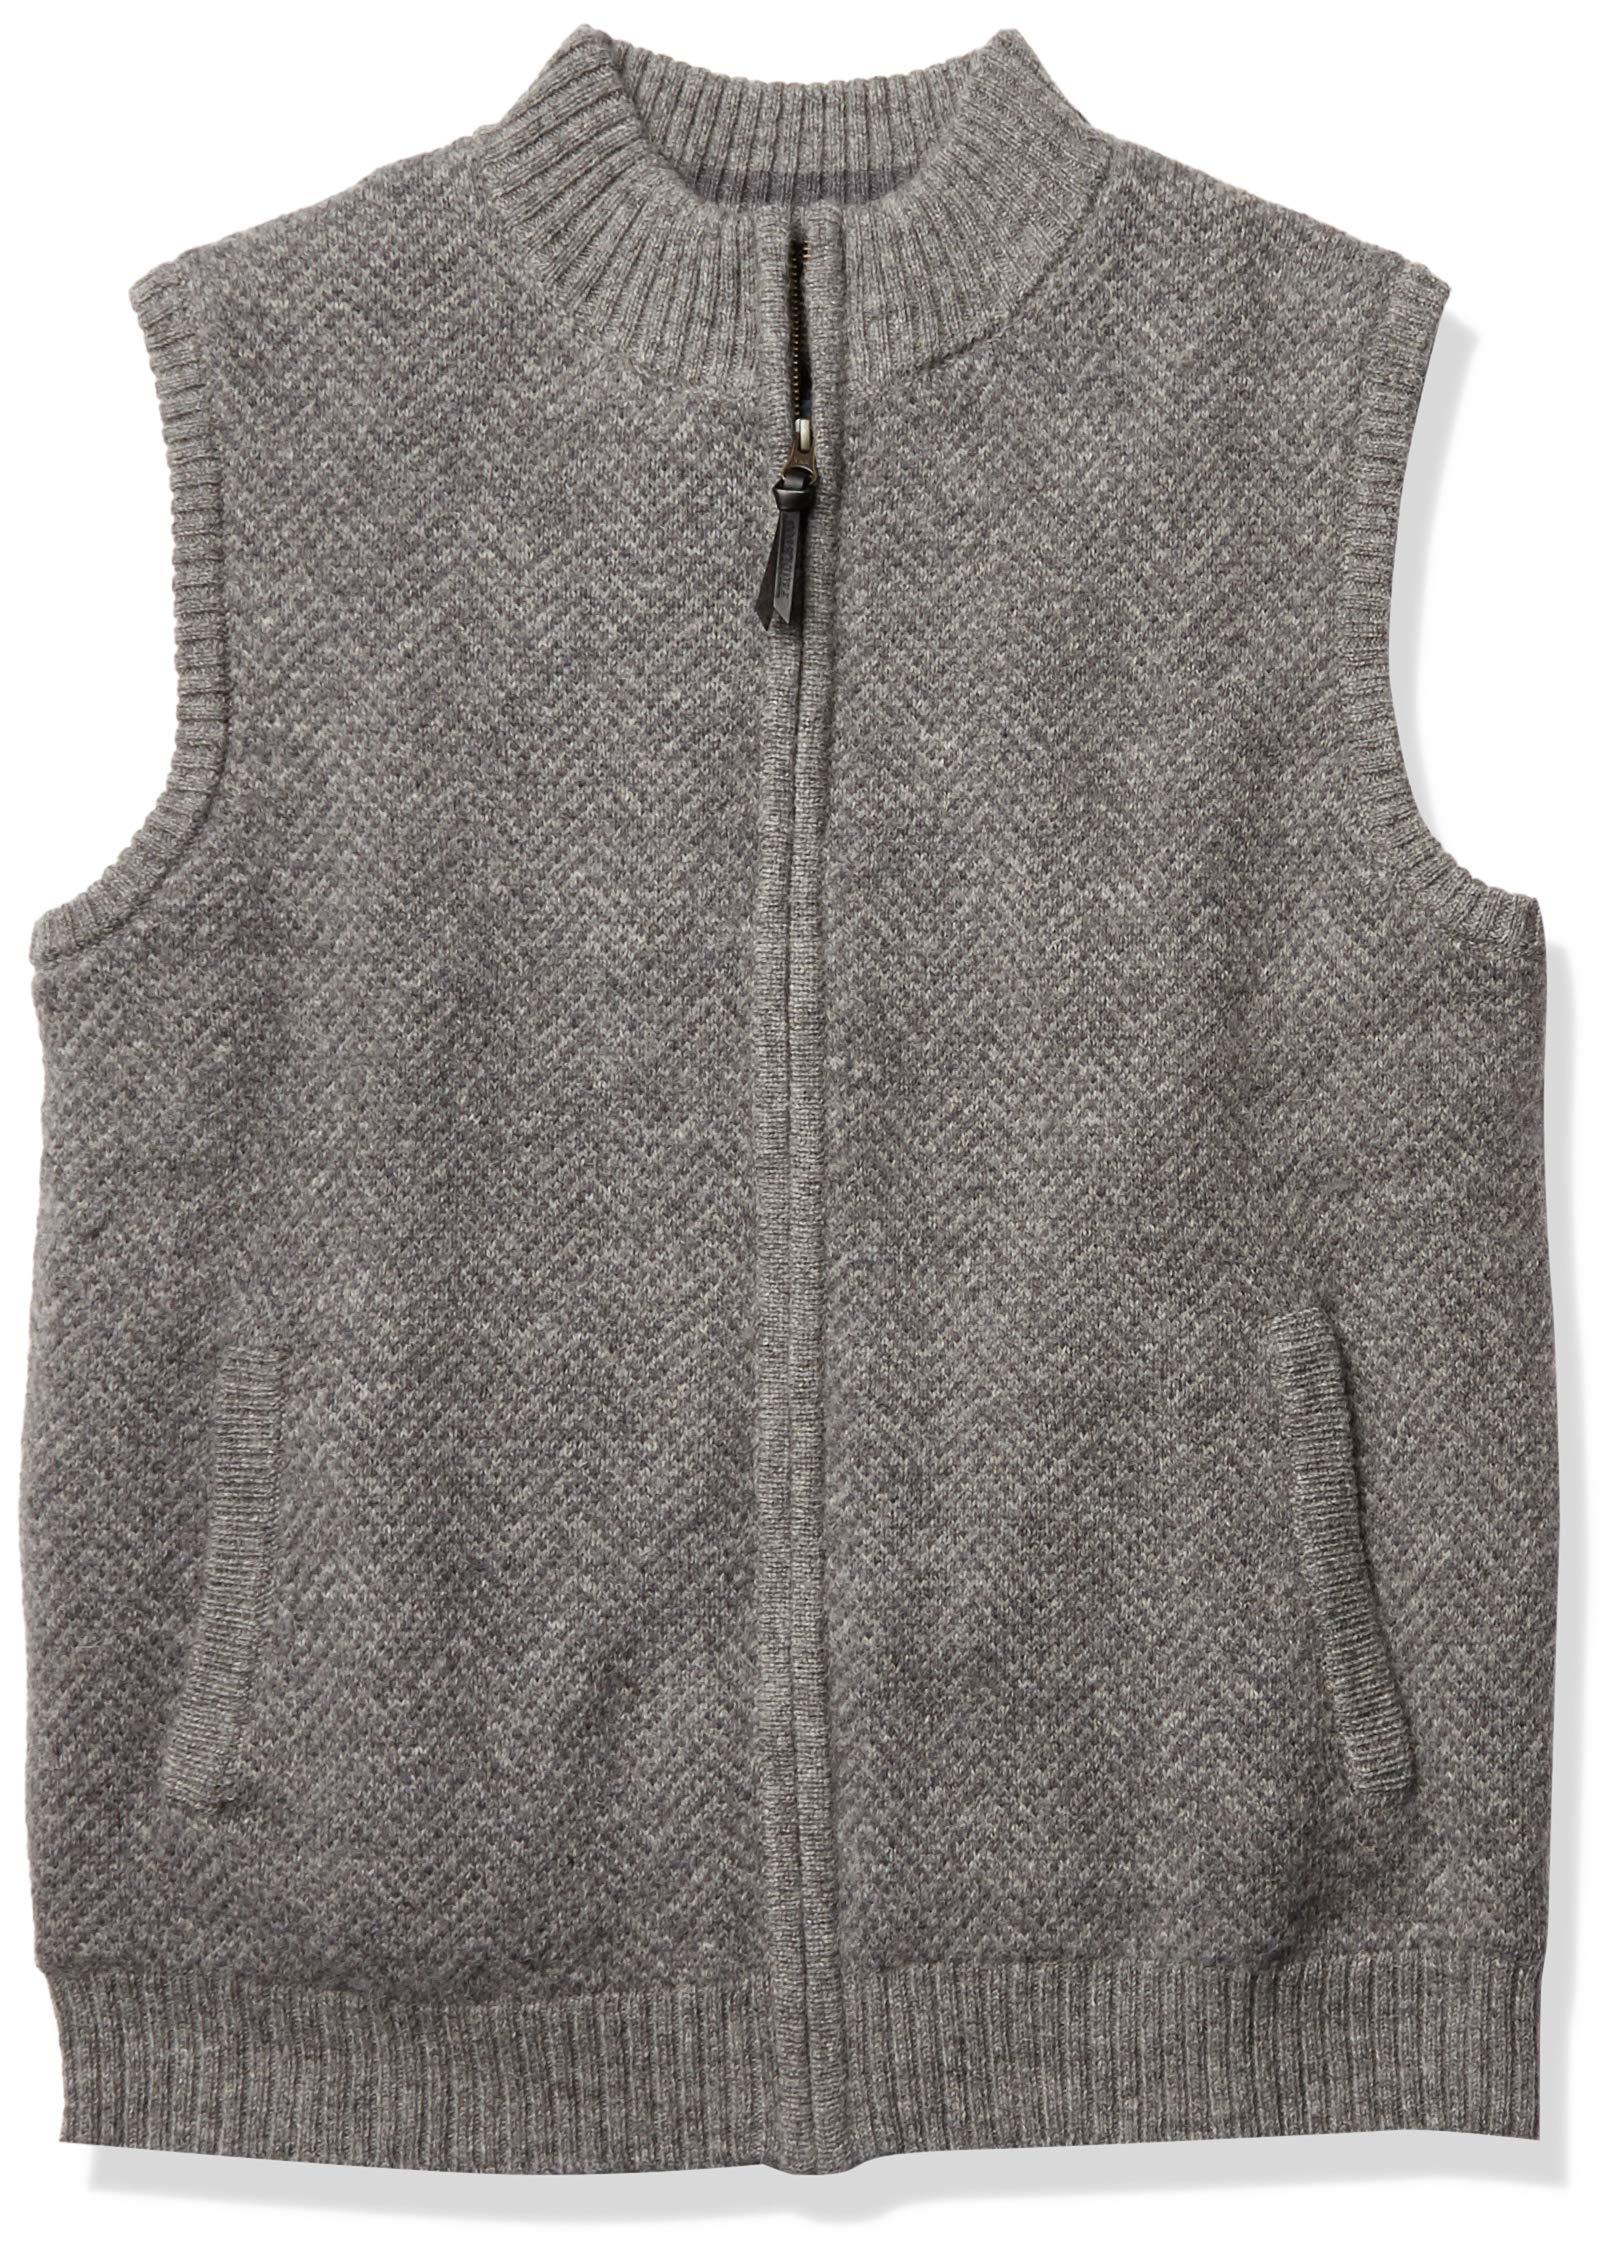 Pendleton Fleece Shetland Zip Sweater Vest in Grey Heather (Gray) for ...